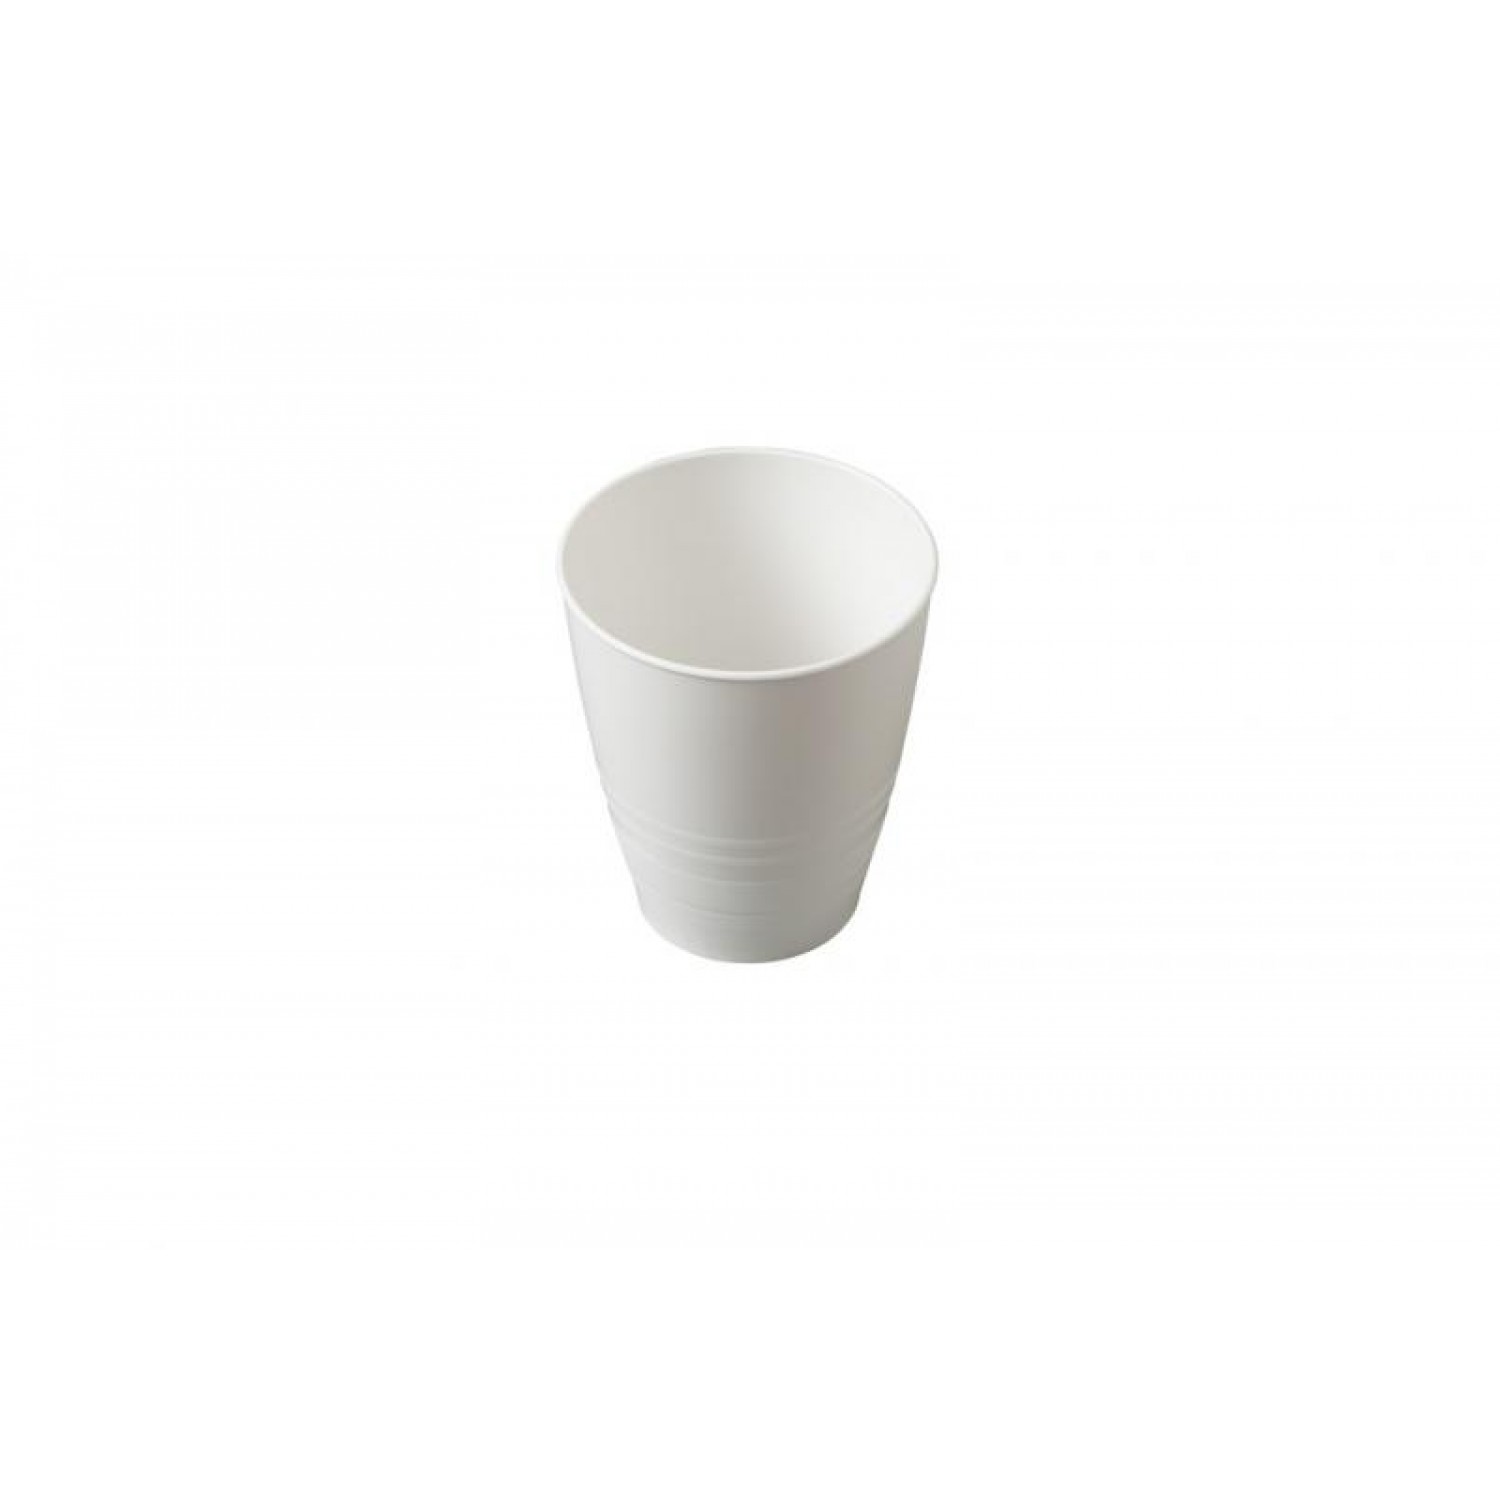 Drinking Cup made of bioplastics